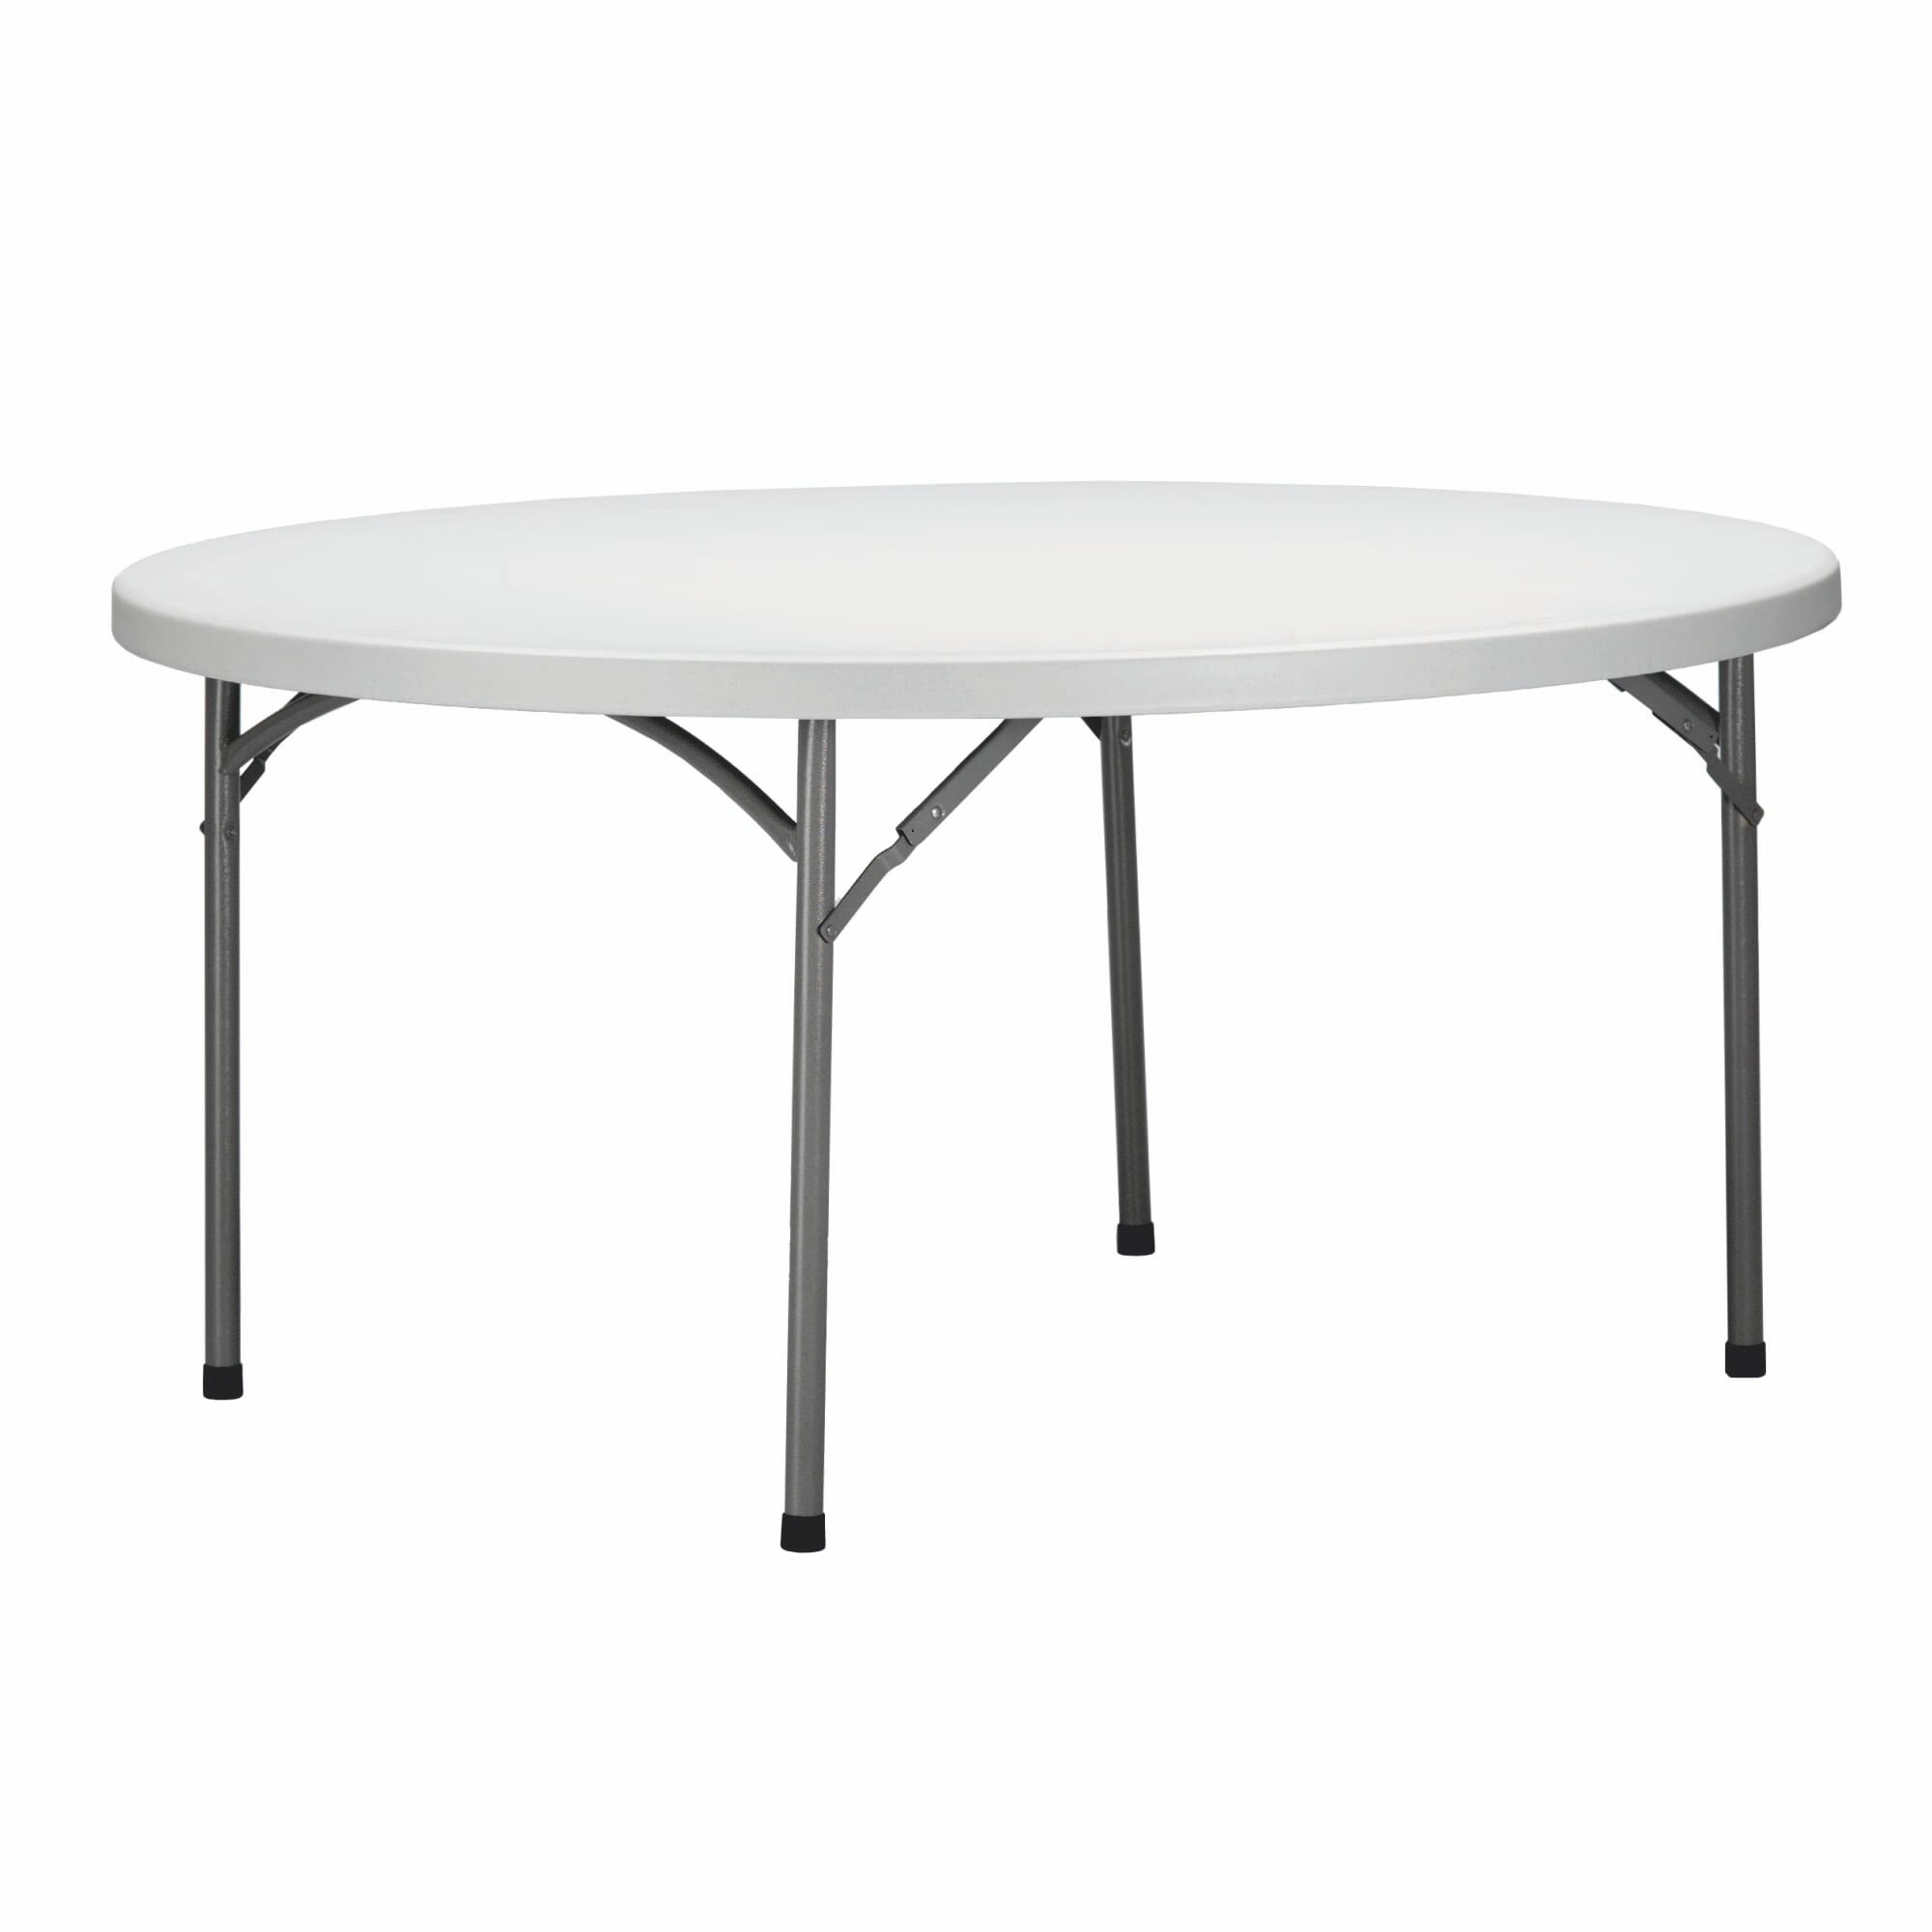 Garbar Mozart round folding table indoors, outdoors Ø200